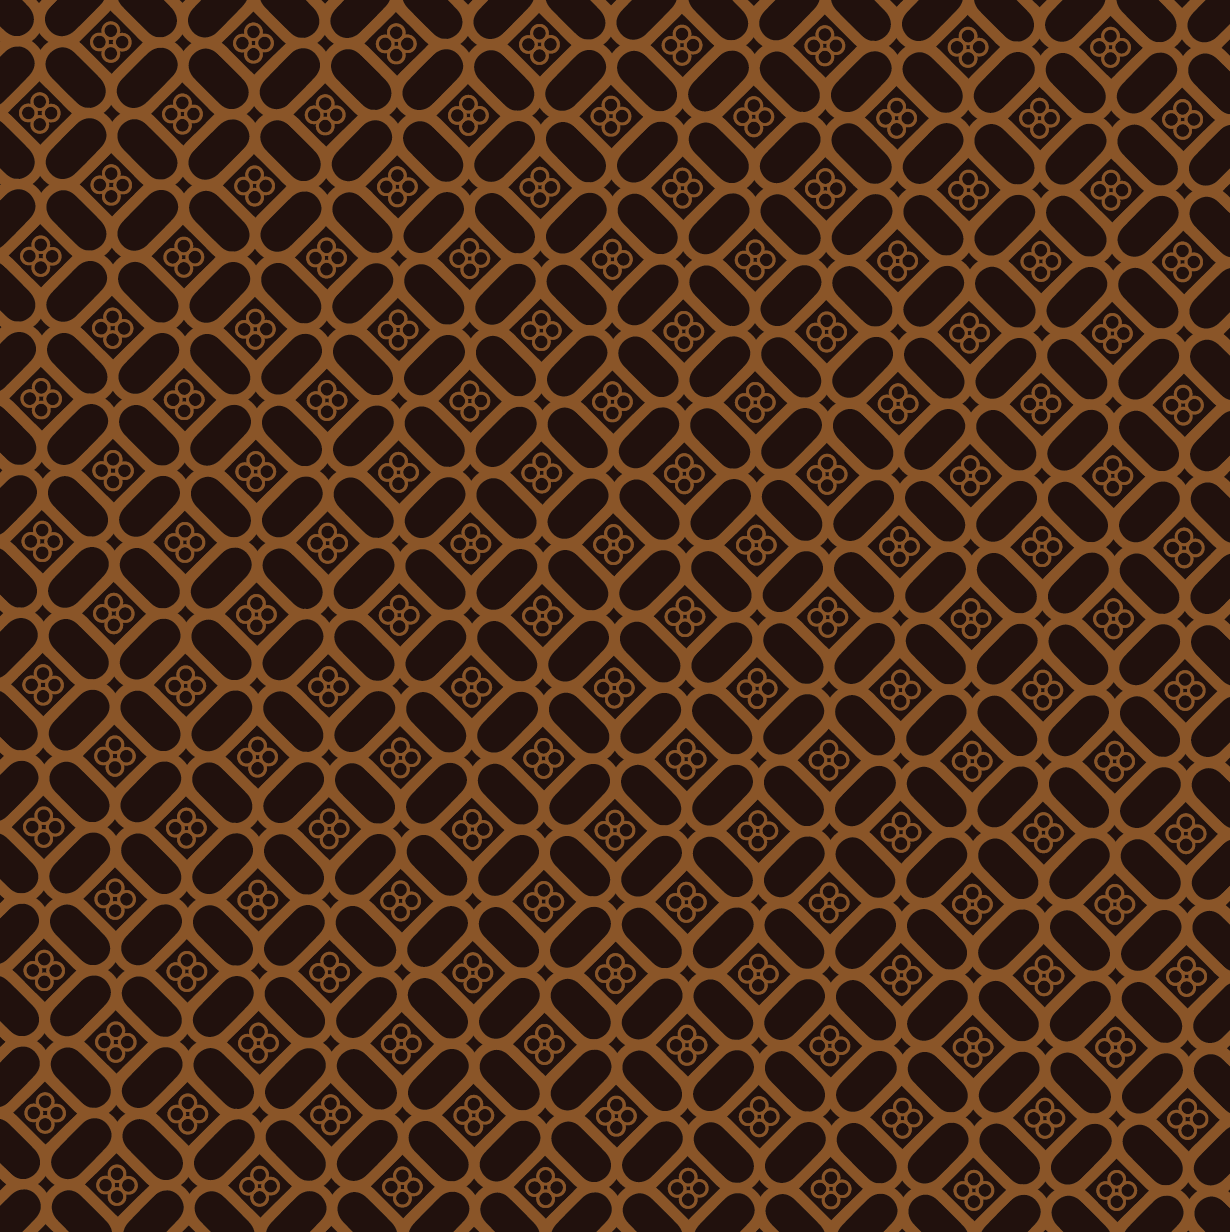 Louis Vuitton Seamless Pattern by Bang-a-rang on DeviantArt